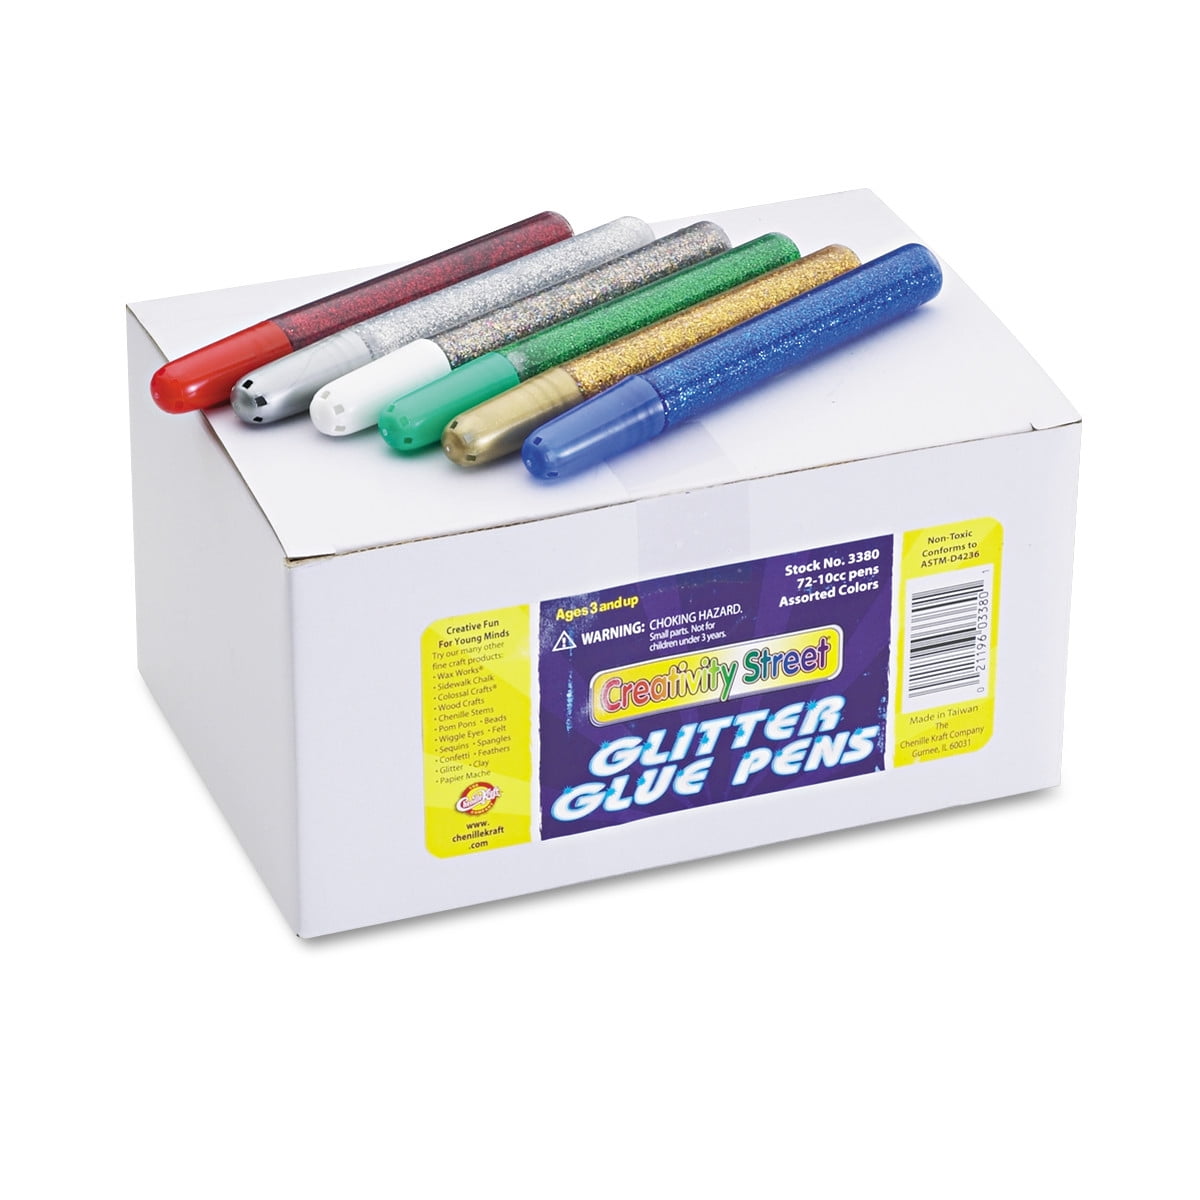 Color Splash Mini Glitter Craft Glue Pens, 4 oz., Transparent, 72